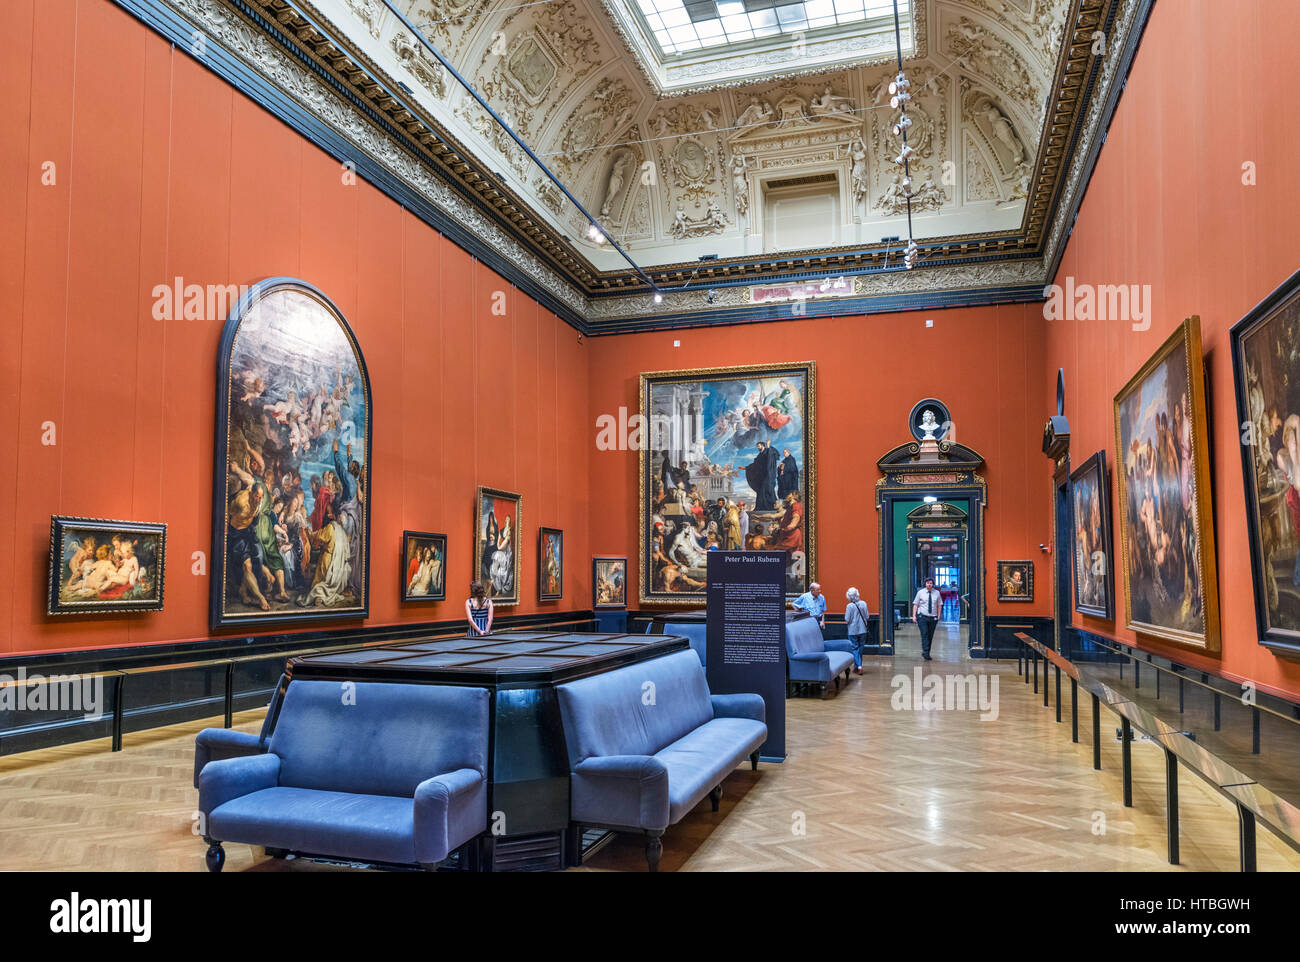 Rubens museum -Fotos und -Bildmaterial in hoher Auflösung – Alamy